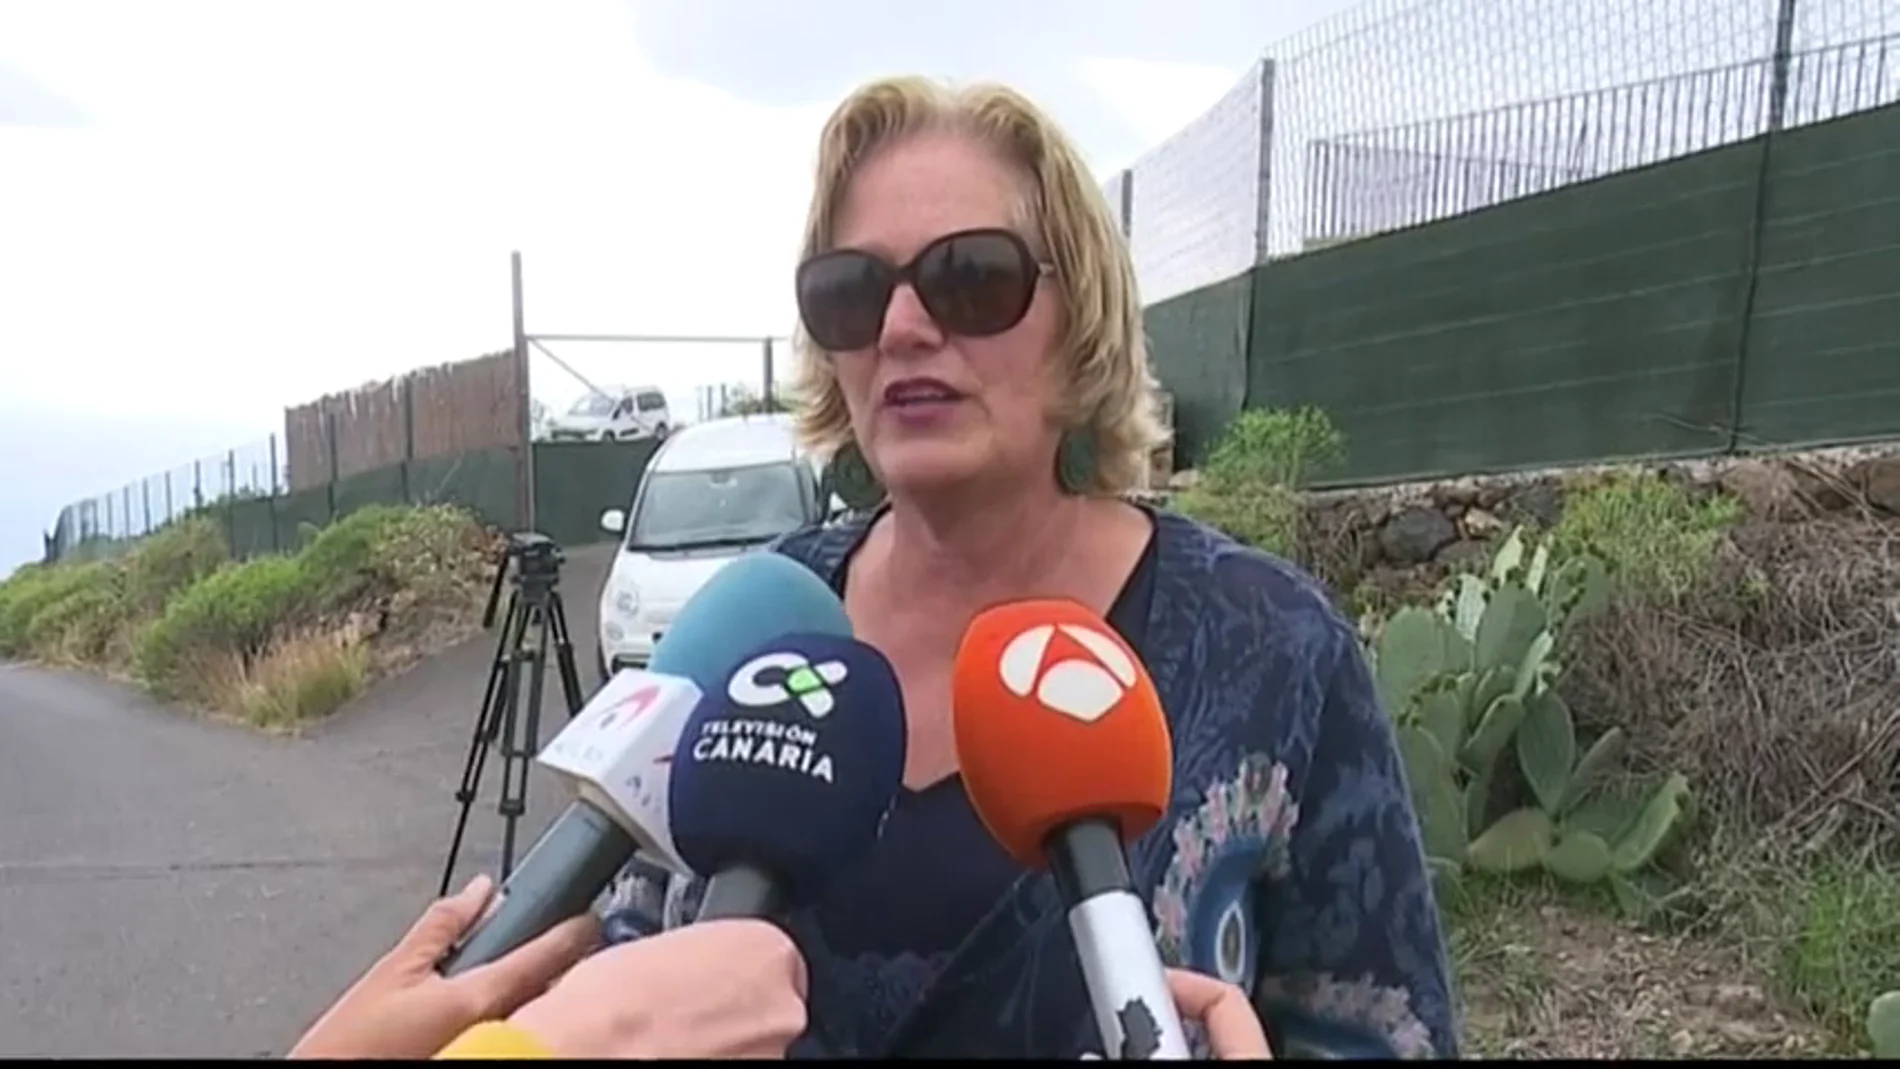 Annalies es la traductora que atendió al pequeño que logró huir del crimen de Tenerife